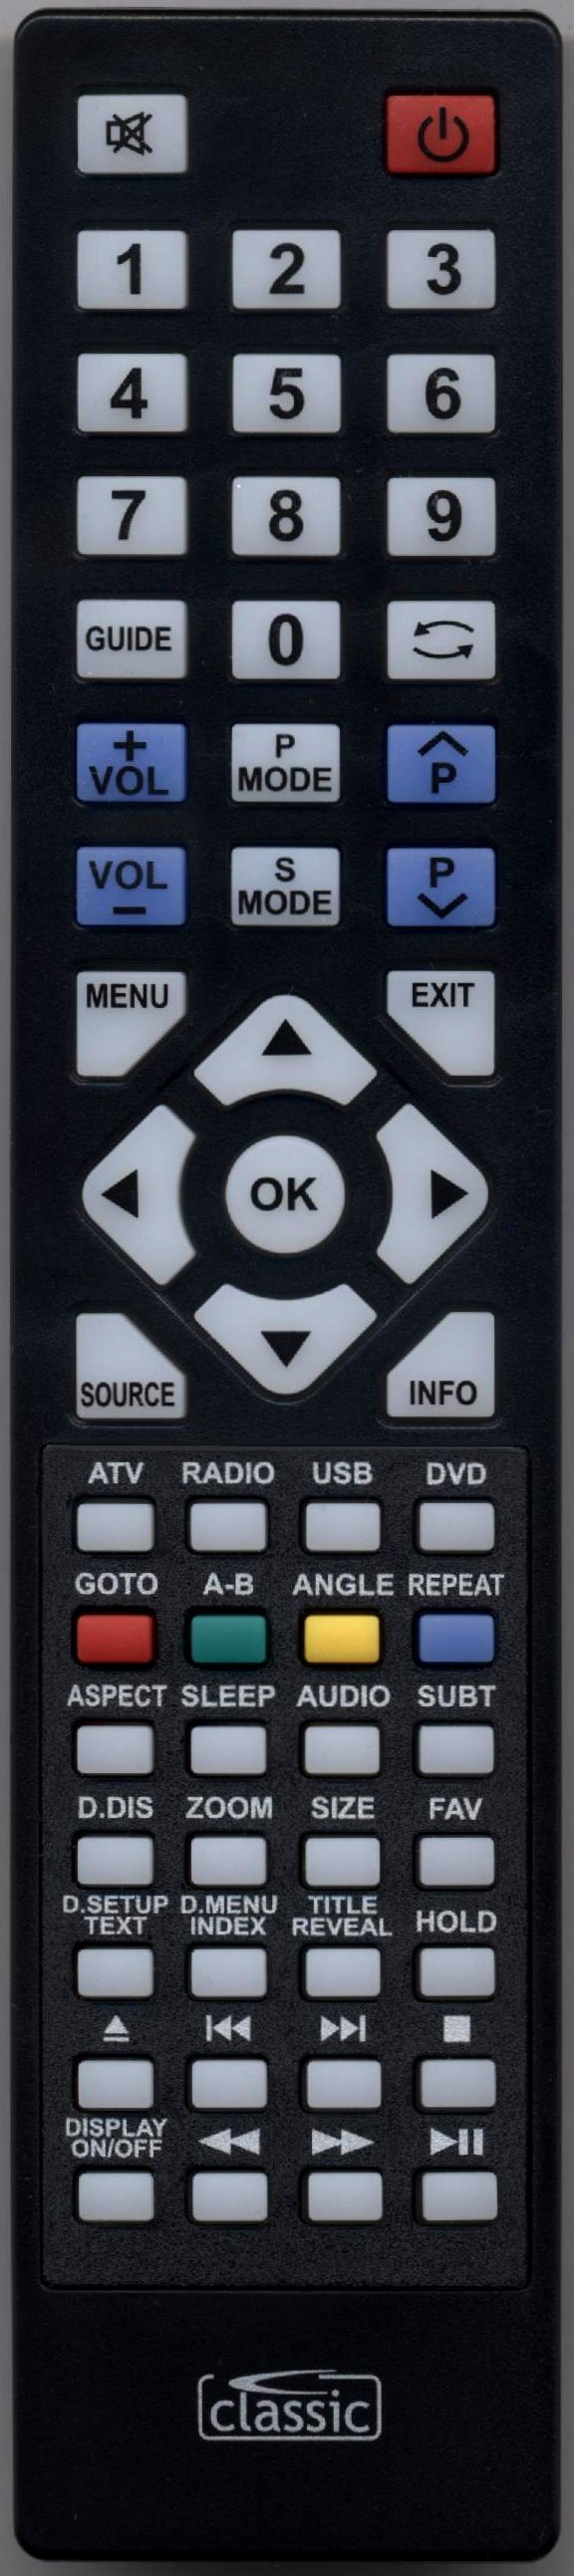 UMC X32/56G-GB-TCDU-UK Remote Control Alternative 